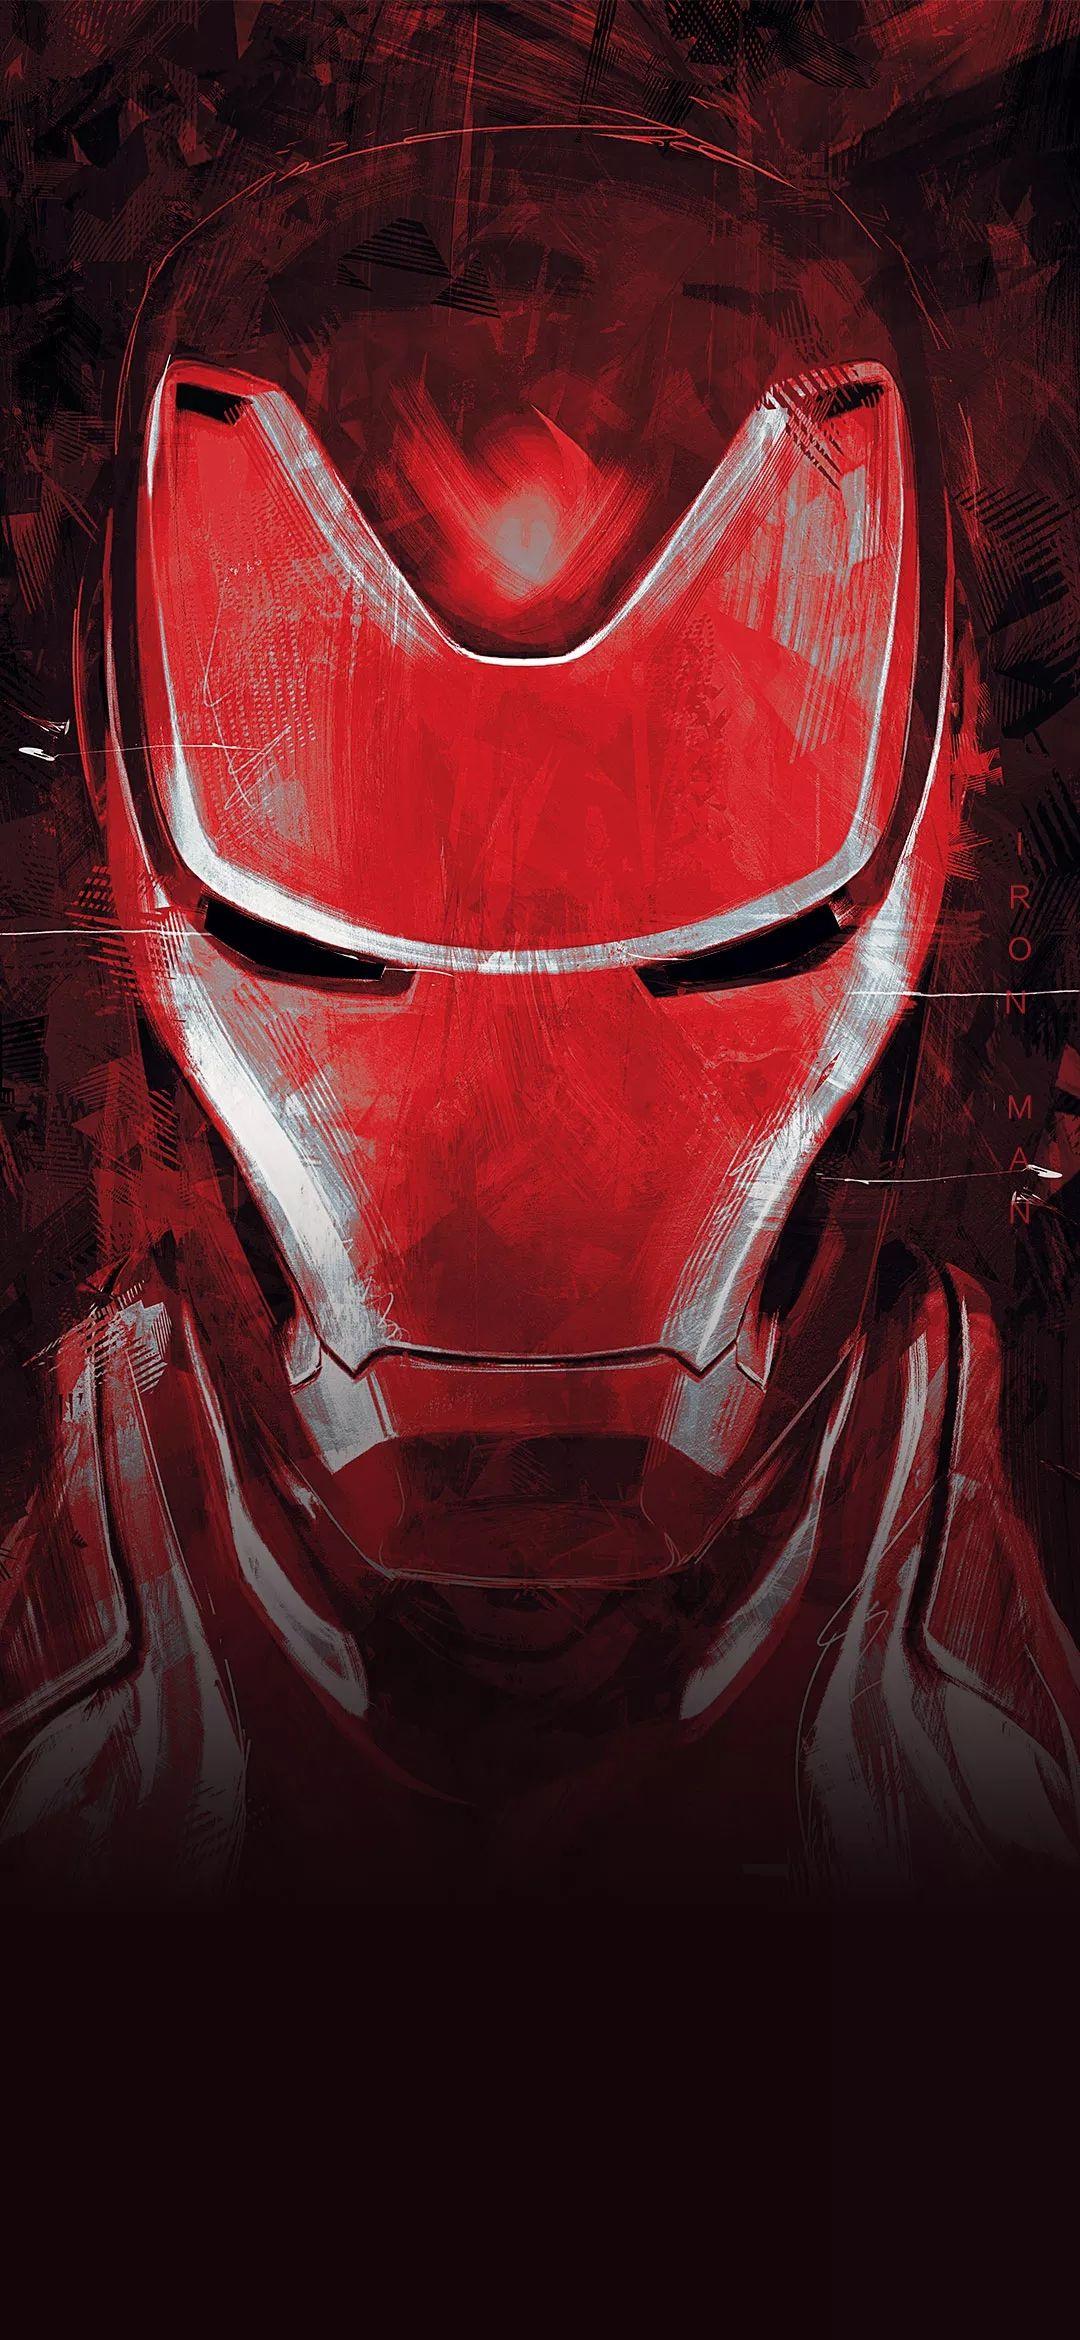 Redmi K20 Pro Wallpaper (YTECHB Exclusive). Iron man HD wallpaper, Iron man wallpaper, Superhero wallpaper iphone